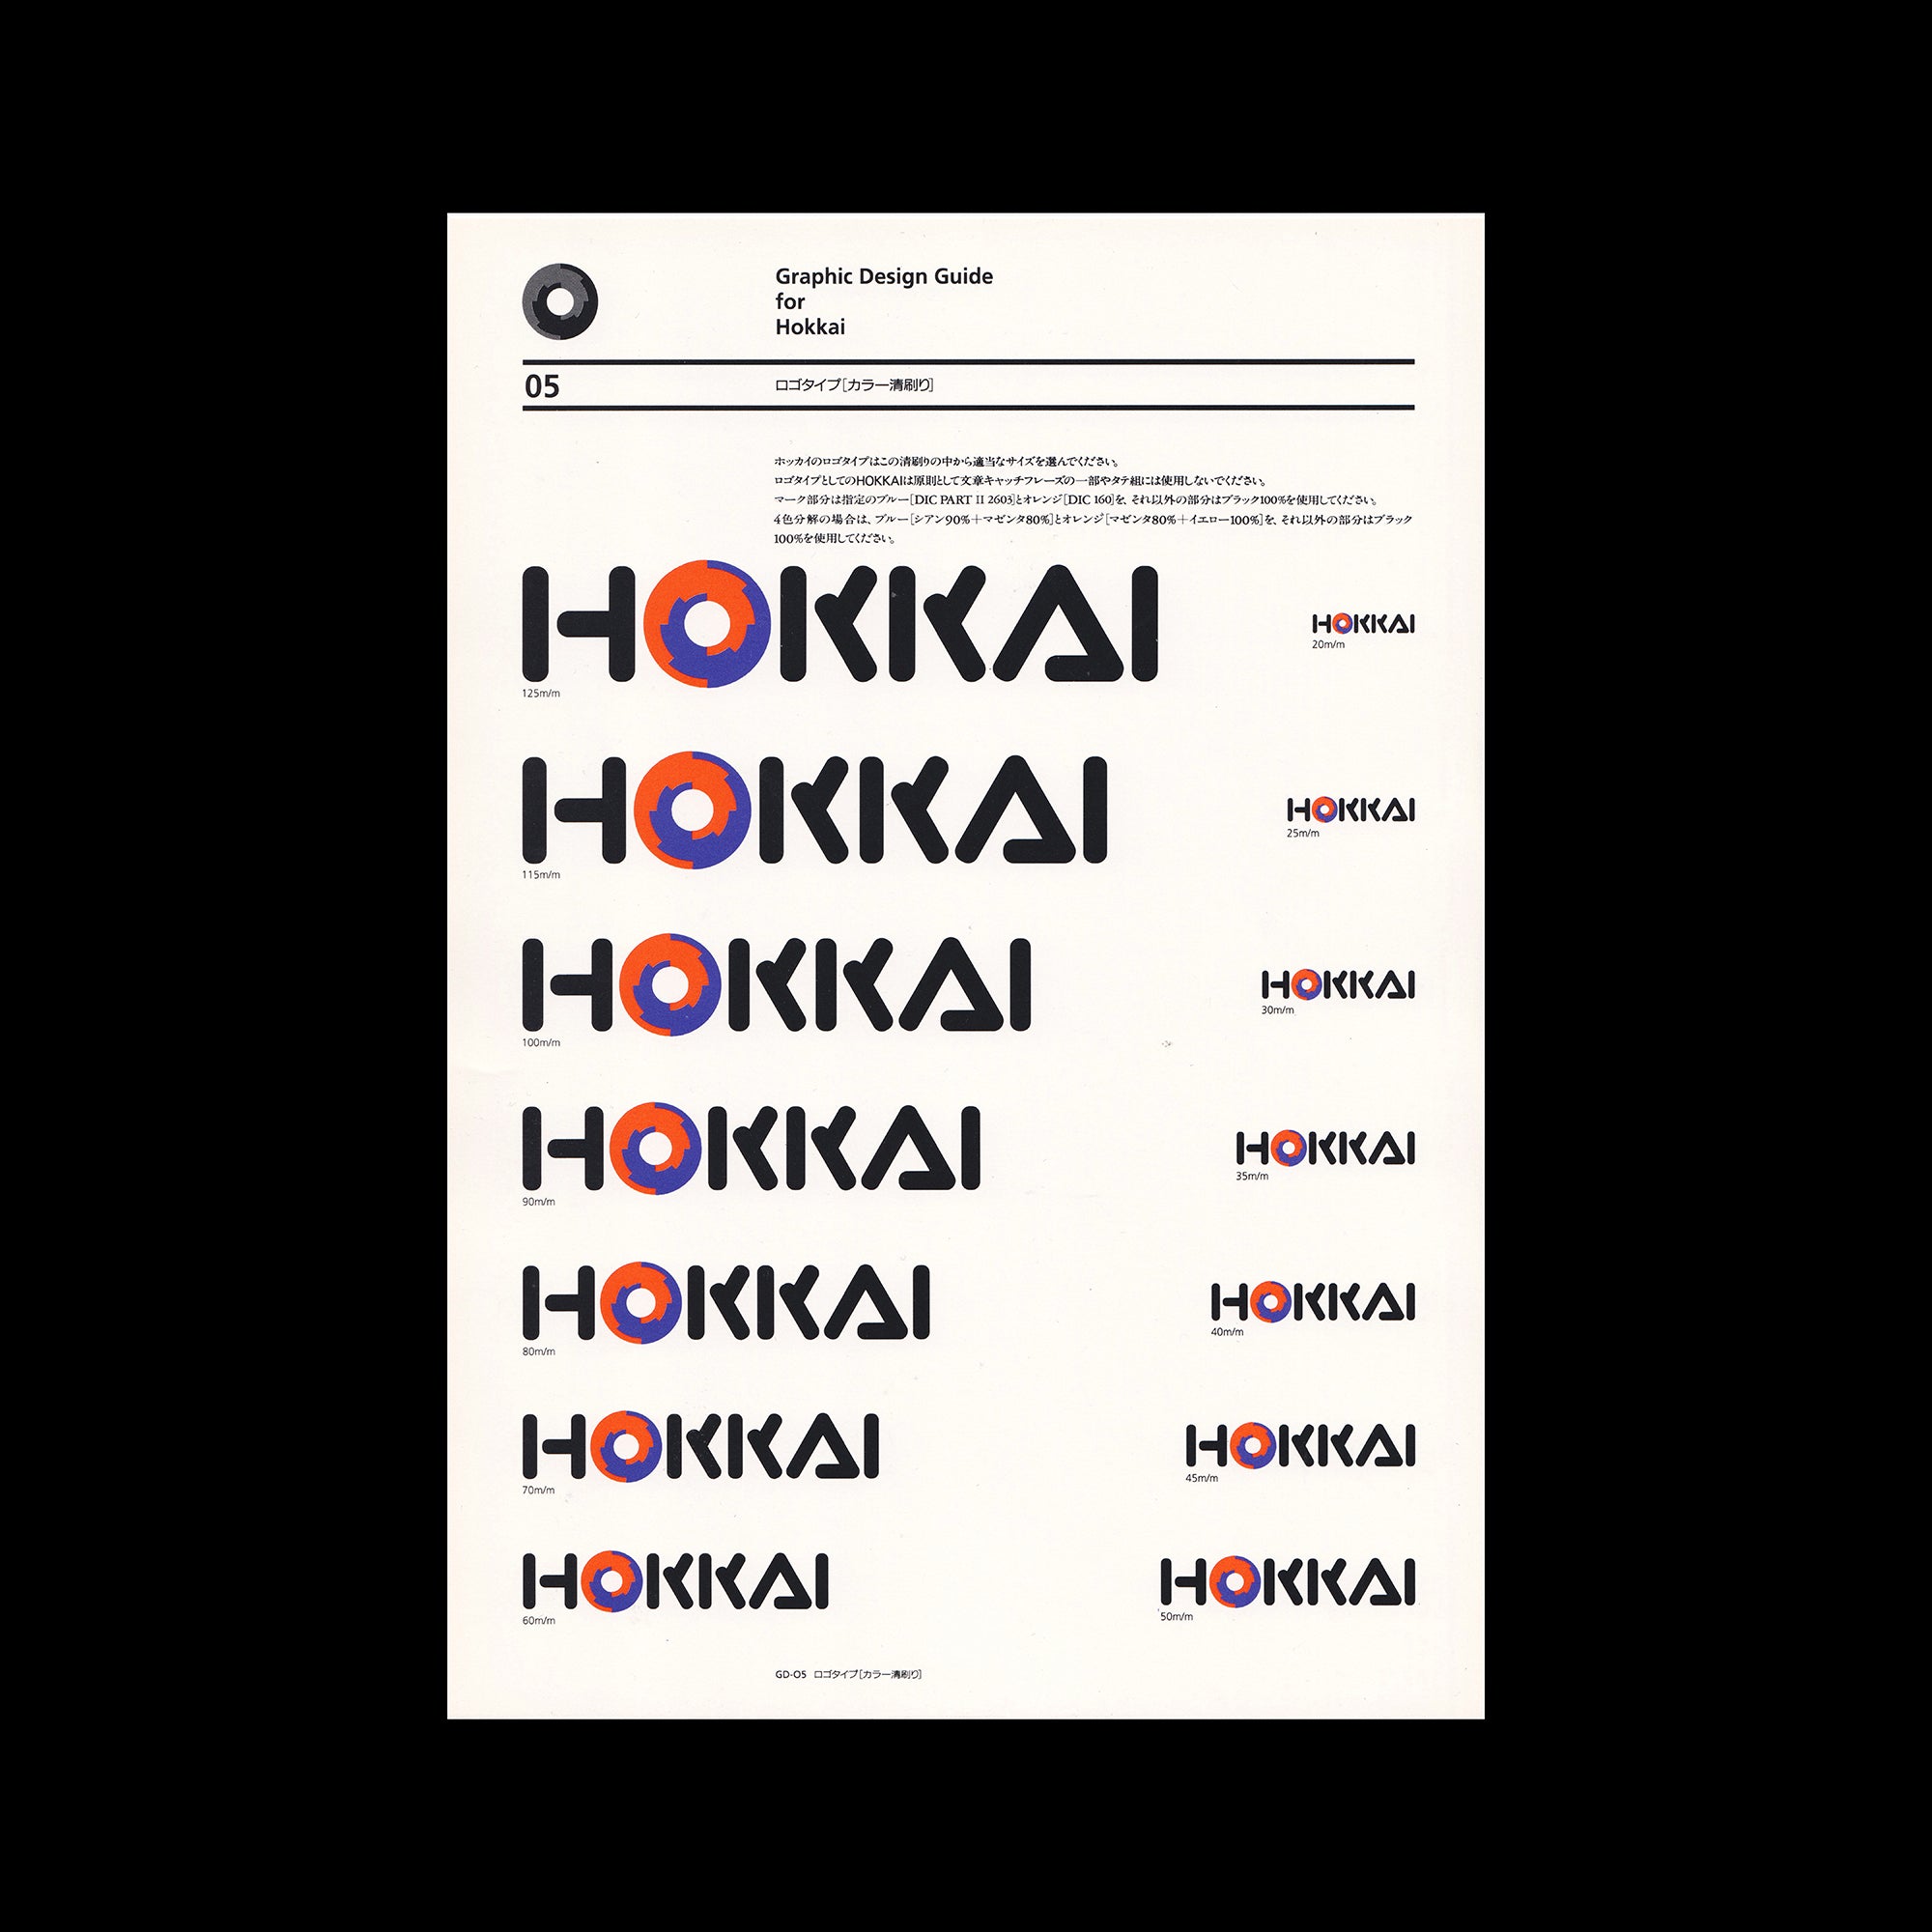 Hokkai Brand Guidelines, 1992